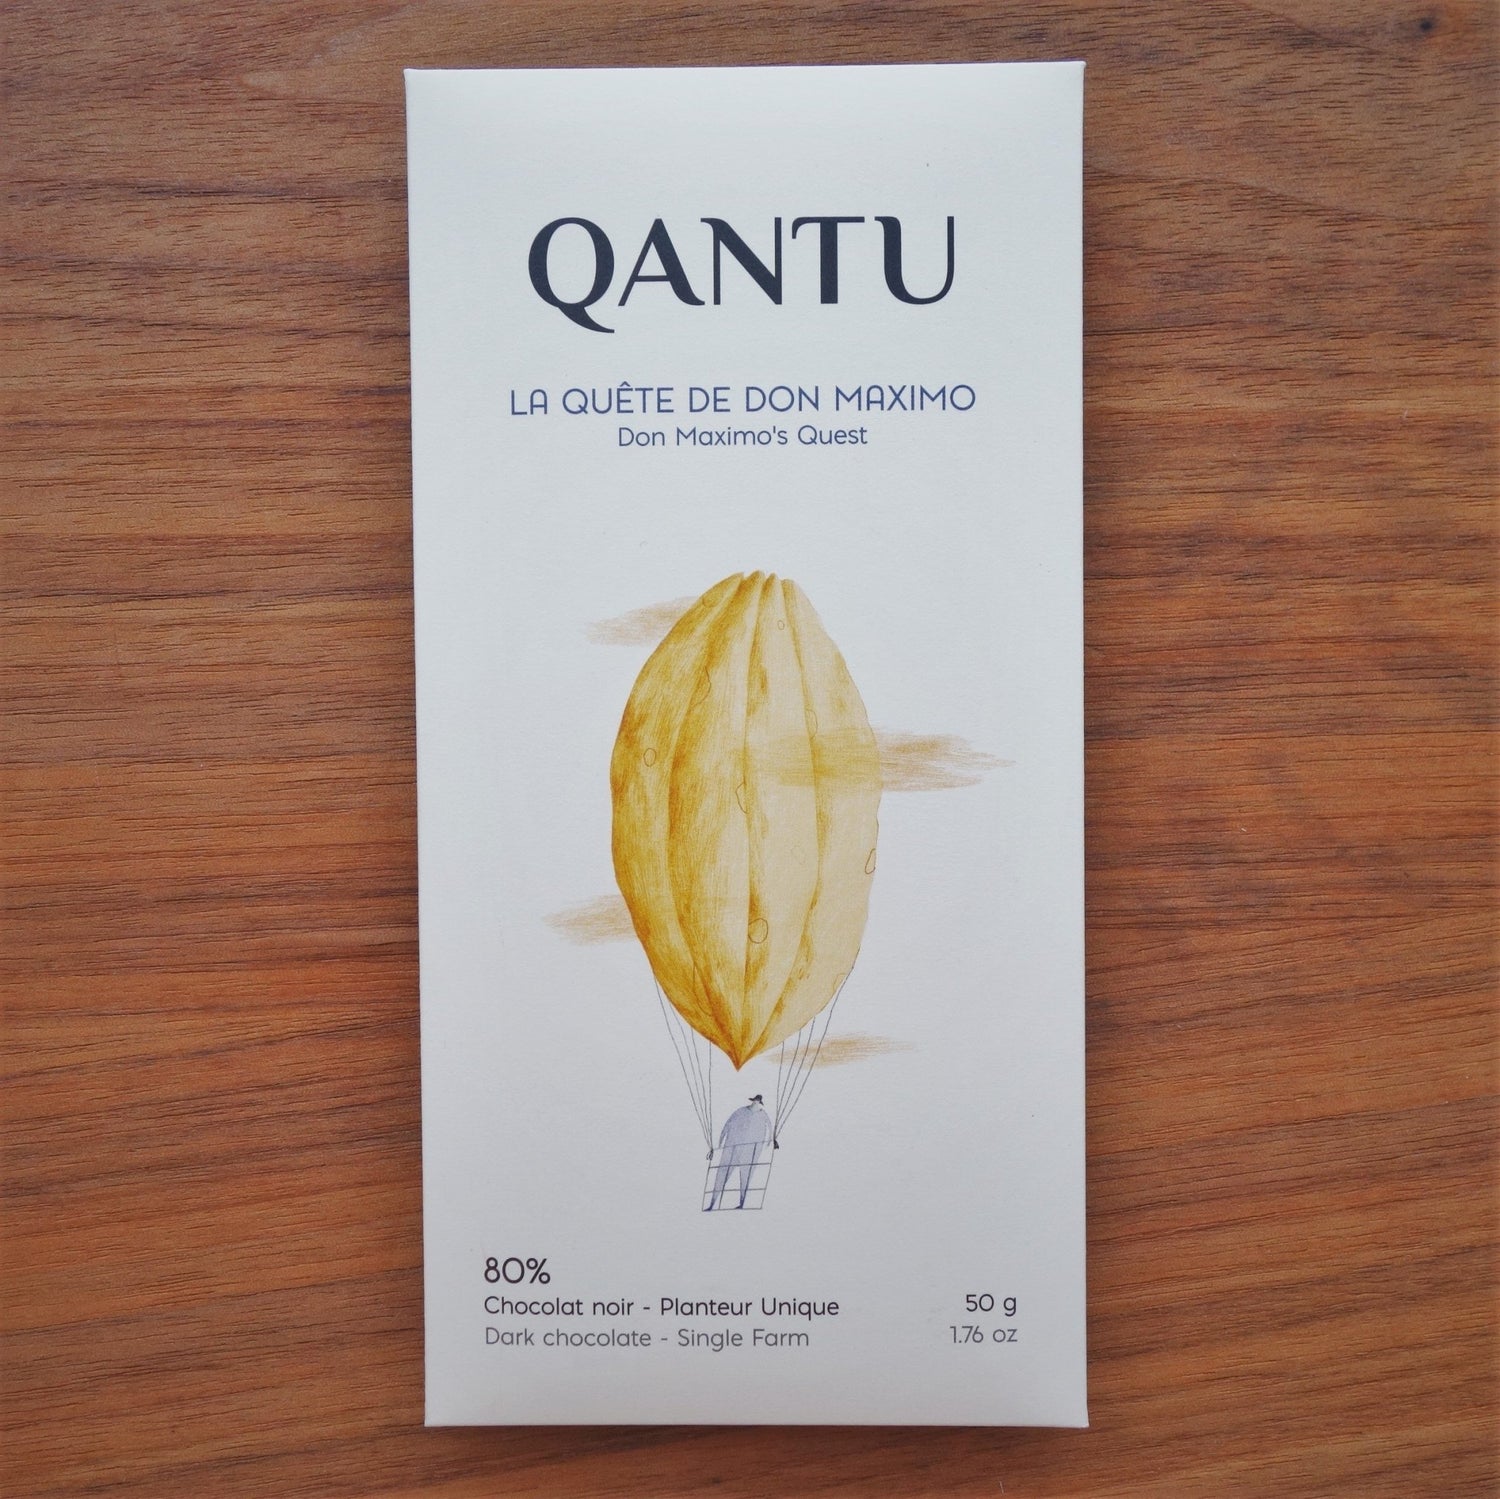 Qantu- Chocolate Don Maximo's Quest 80% - Mongers' Provisions